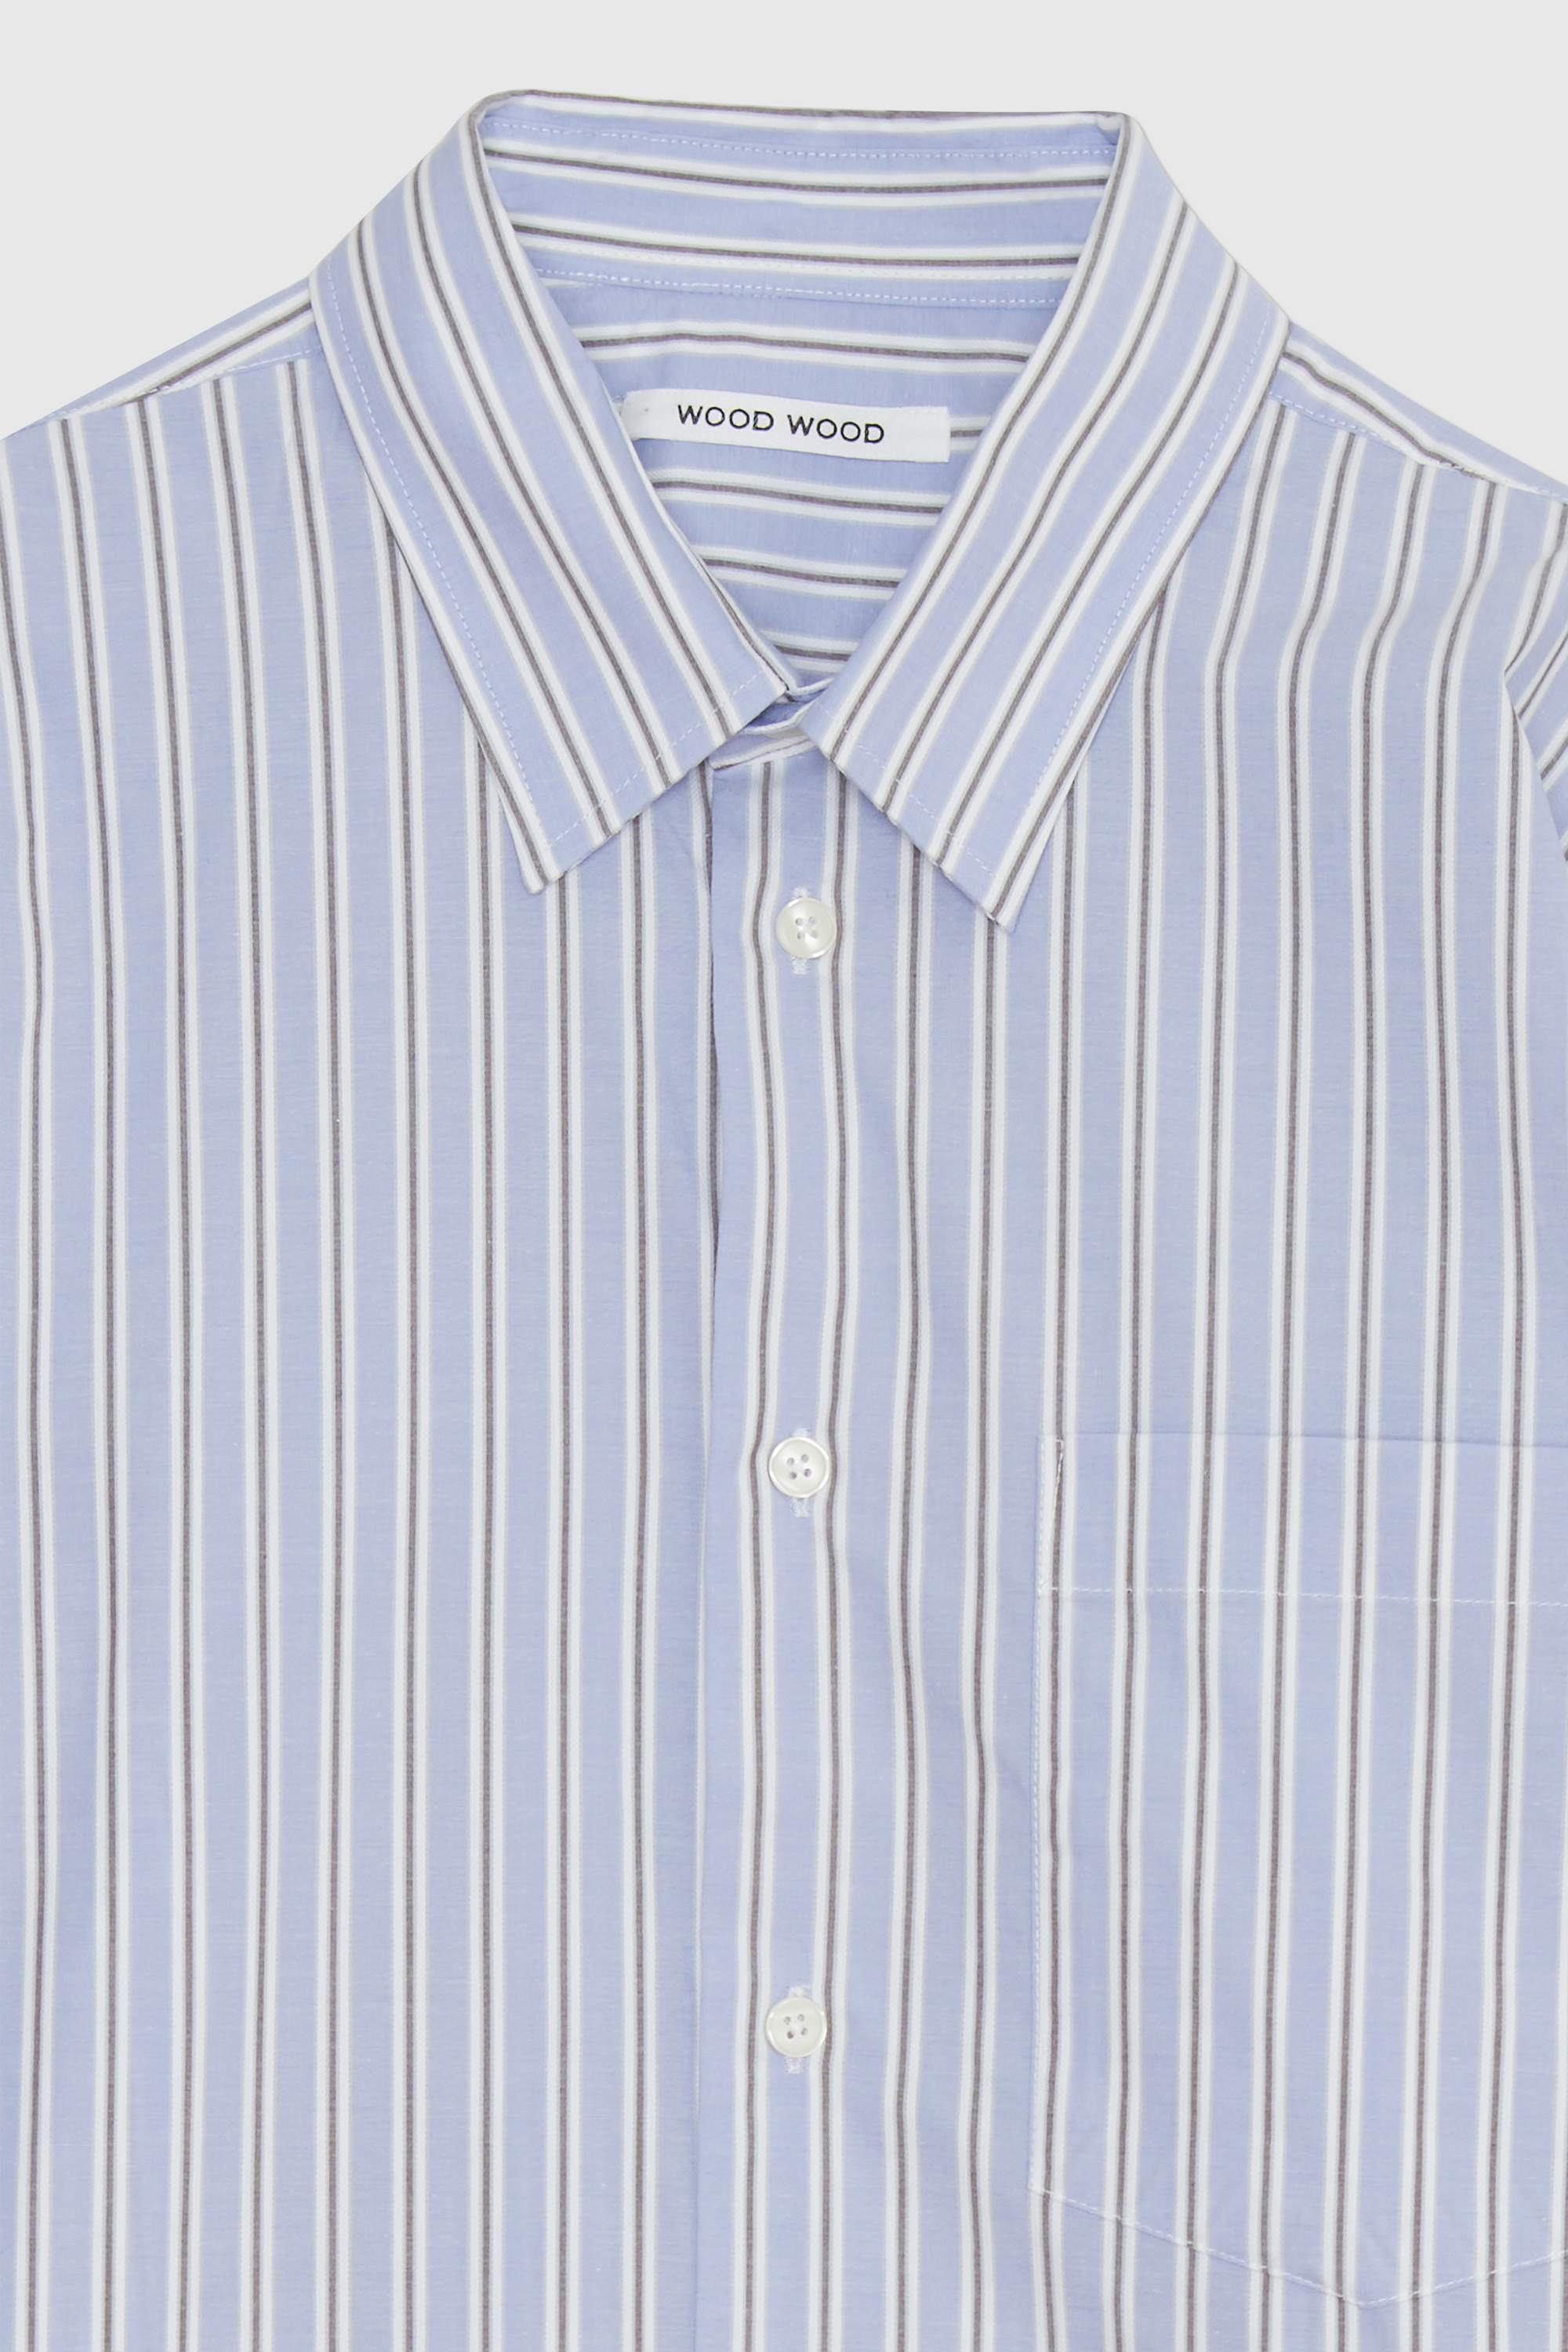 Wood Wood Nico Poplin Shirt Azure blue stripes | WoodWood.com